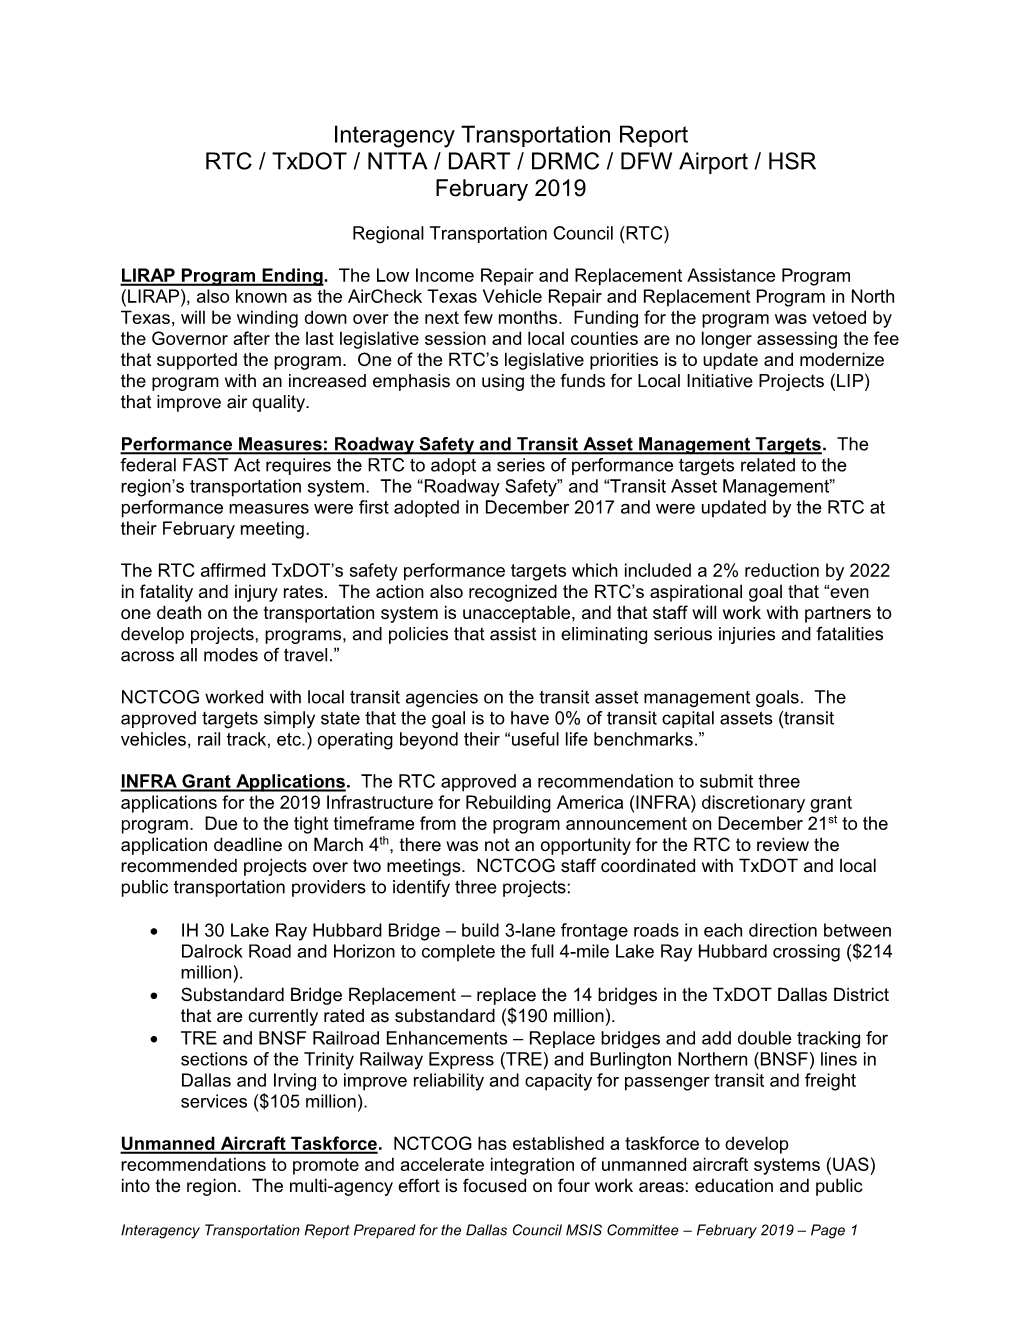 Interagency Transportation Report RTC / Txdot / NTTA / DART / DRMC / DFW Airport / HSR February 2019